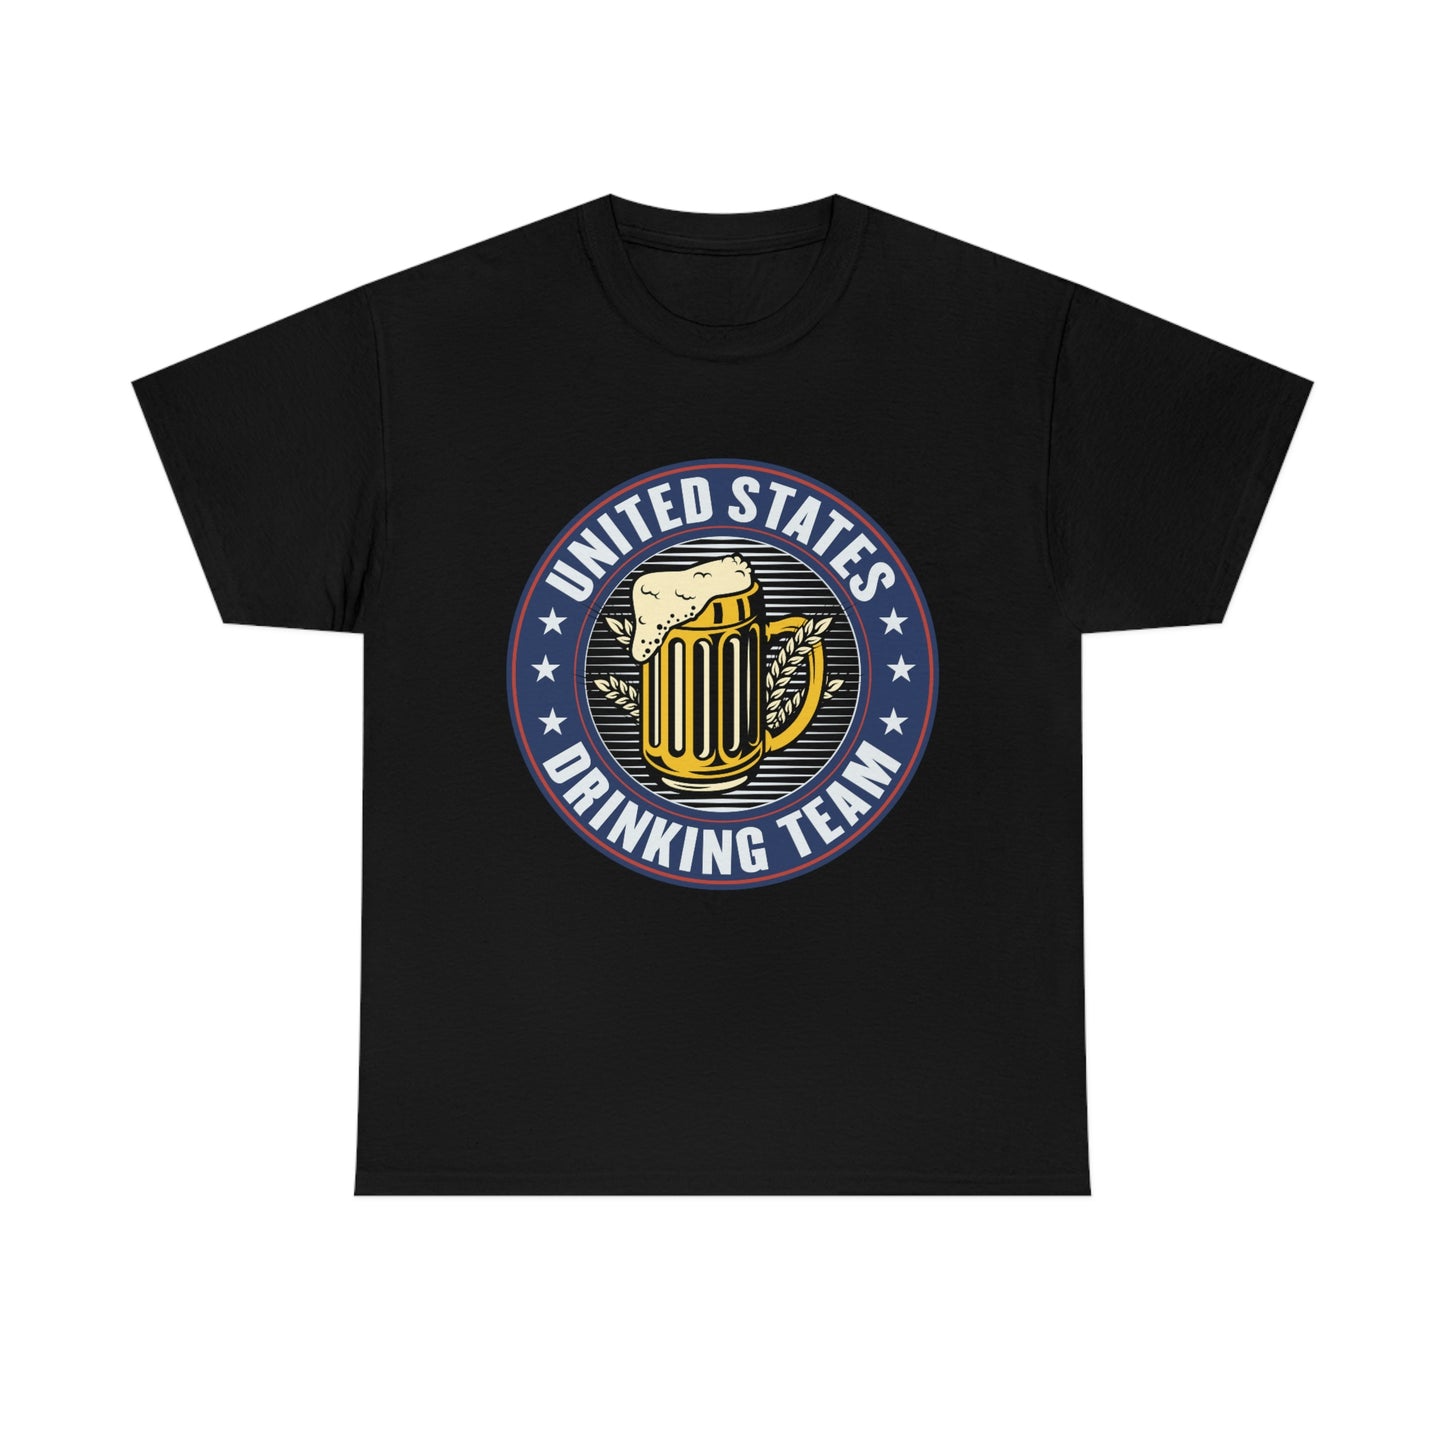 United States Drinking Team T-Shirt